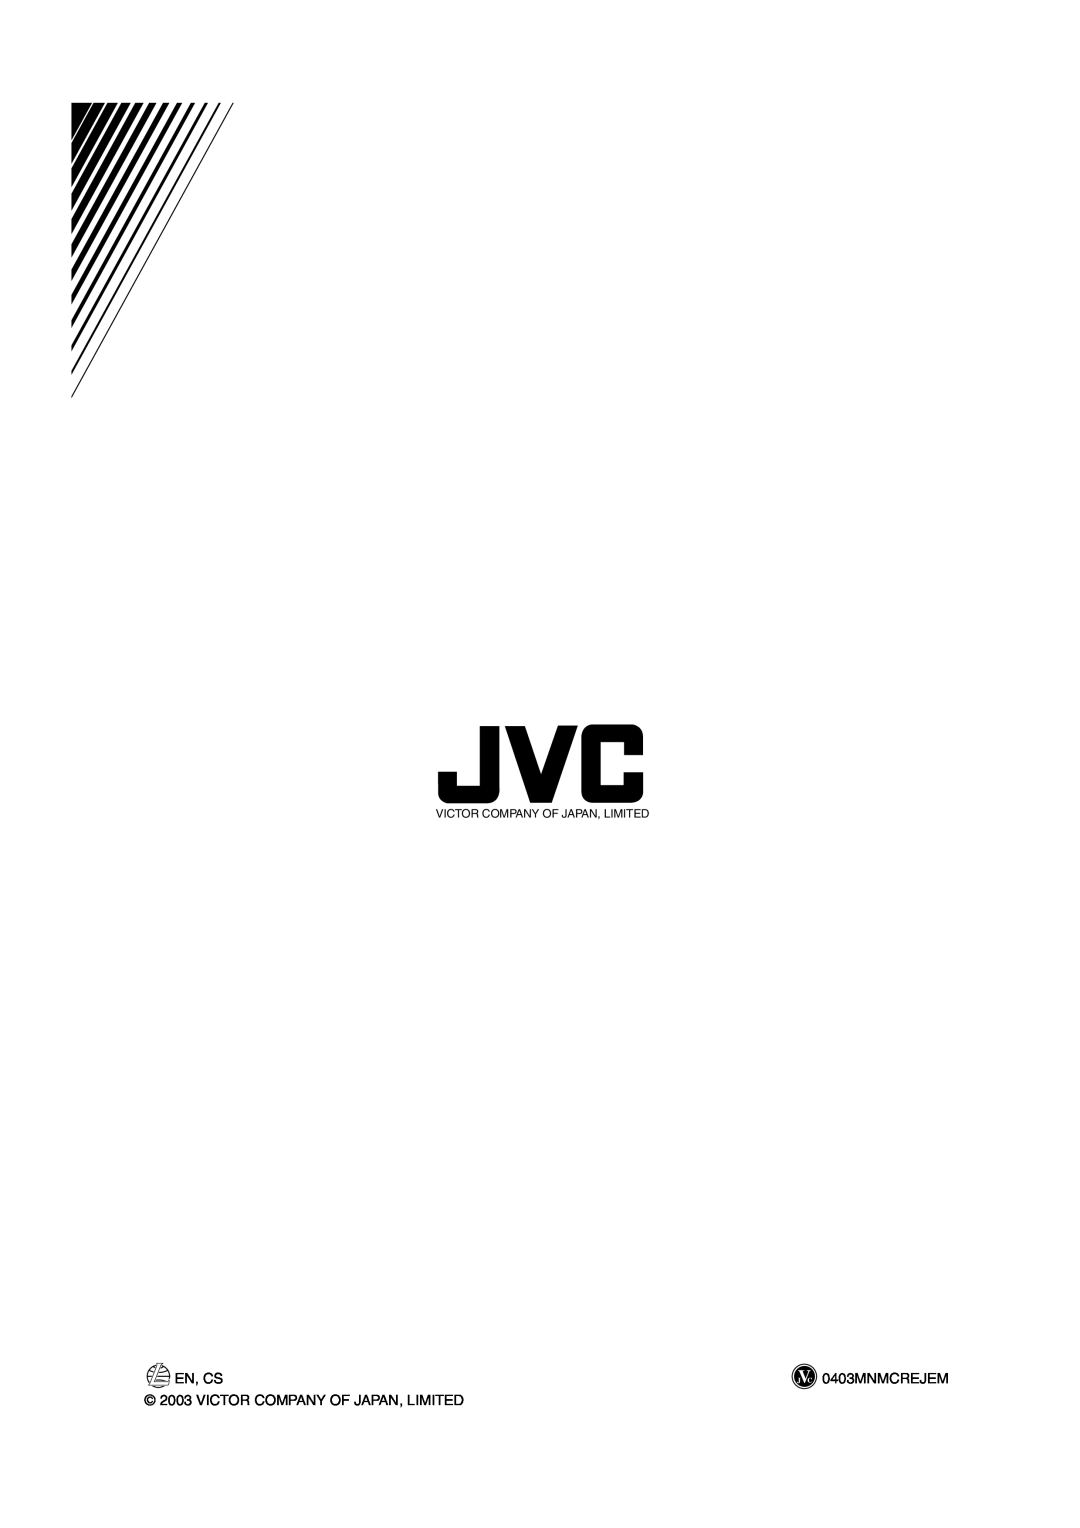 JVC FS-X1, FS-X3 manual En, Cs, 0403MNMCREJEM, Victor Company Of Japan, Limited 